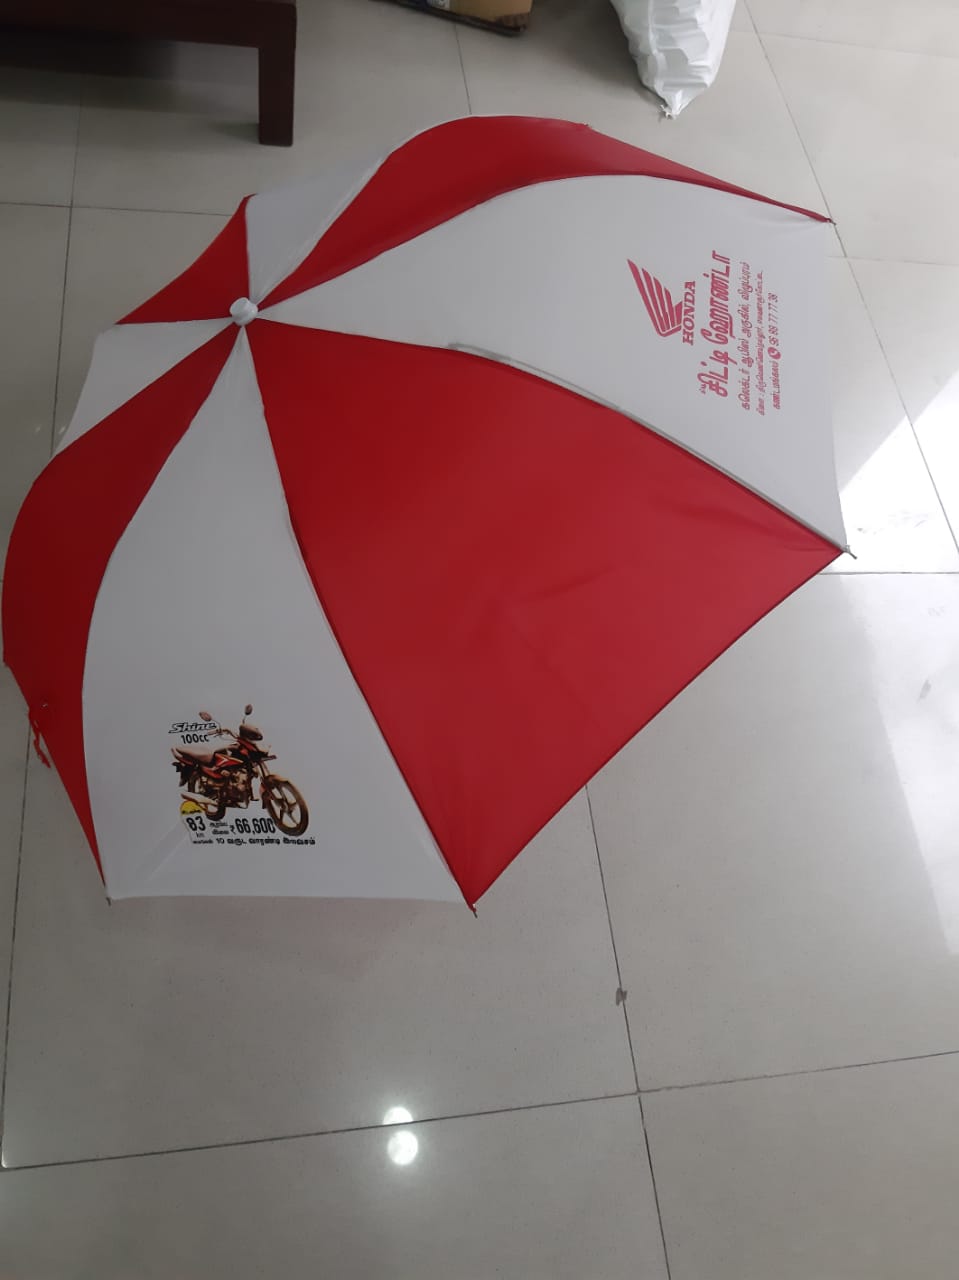 promotional umbrella New City HONDA in Villupuram,promotional umbrella manufacturers in New City HONDA in Villupuram,promotional umbrella printing,promo